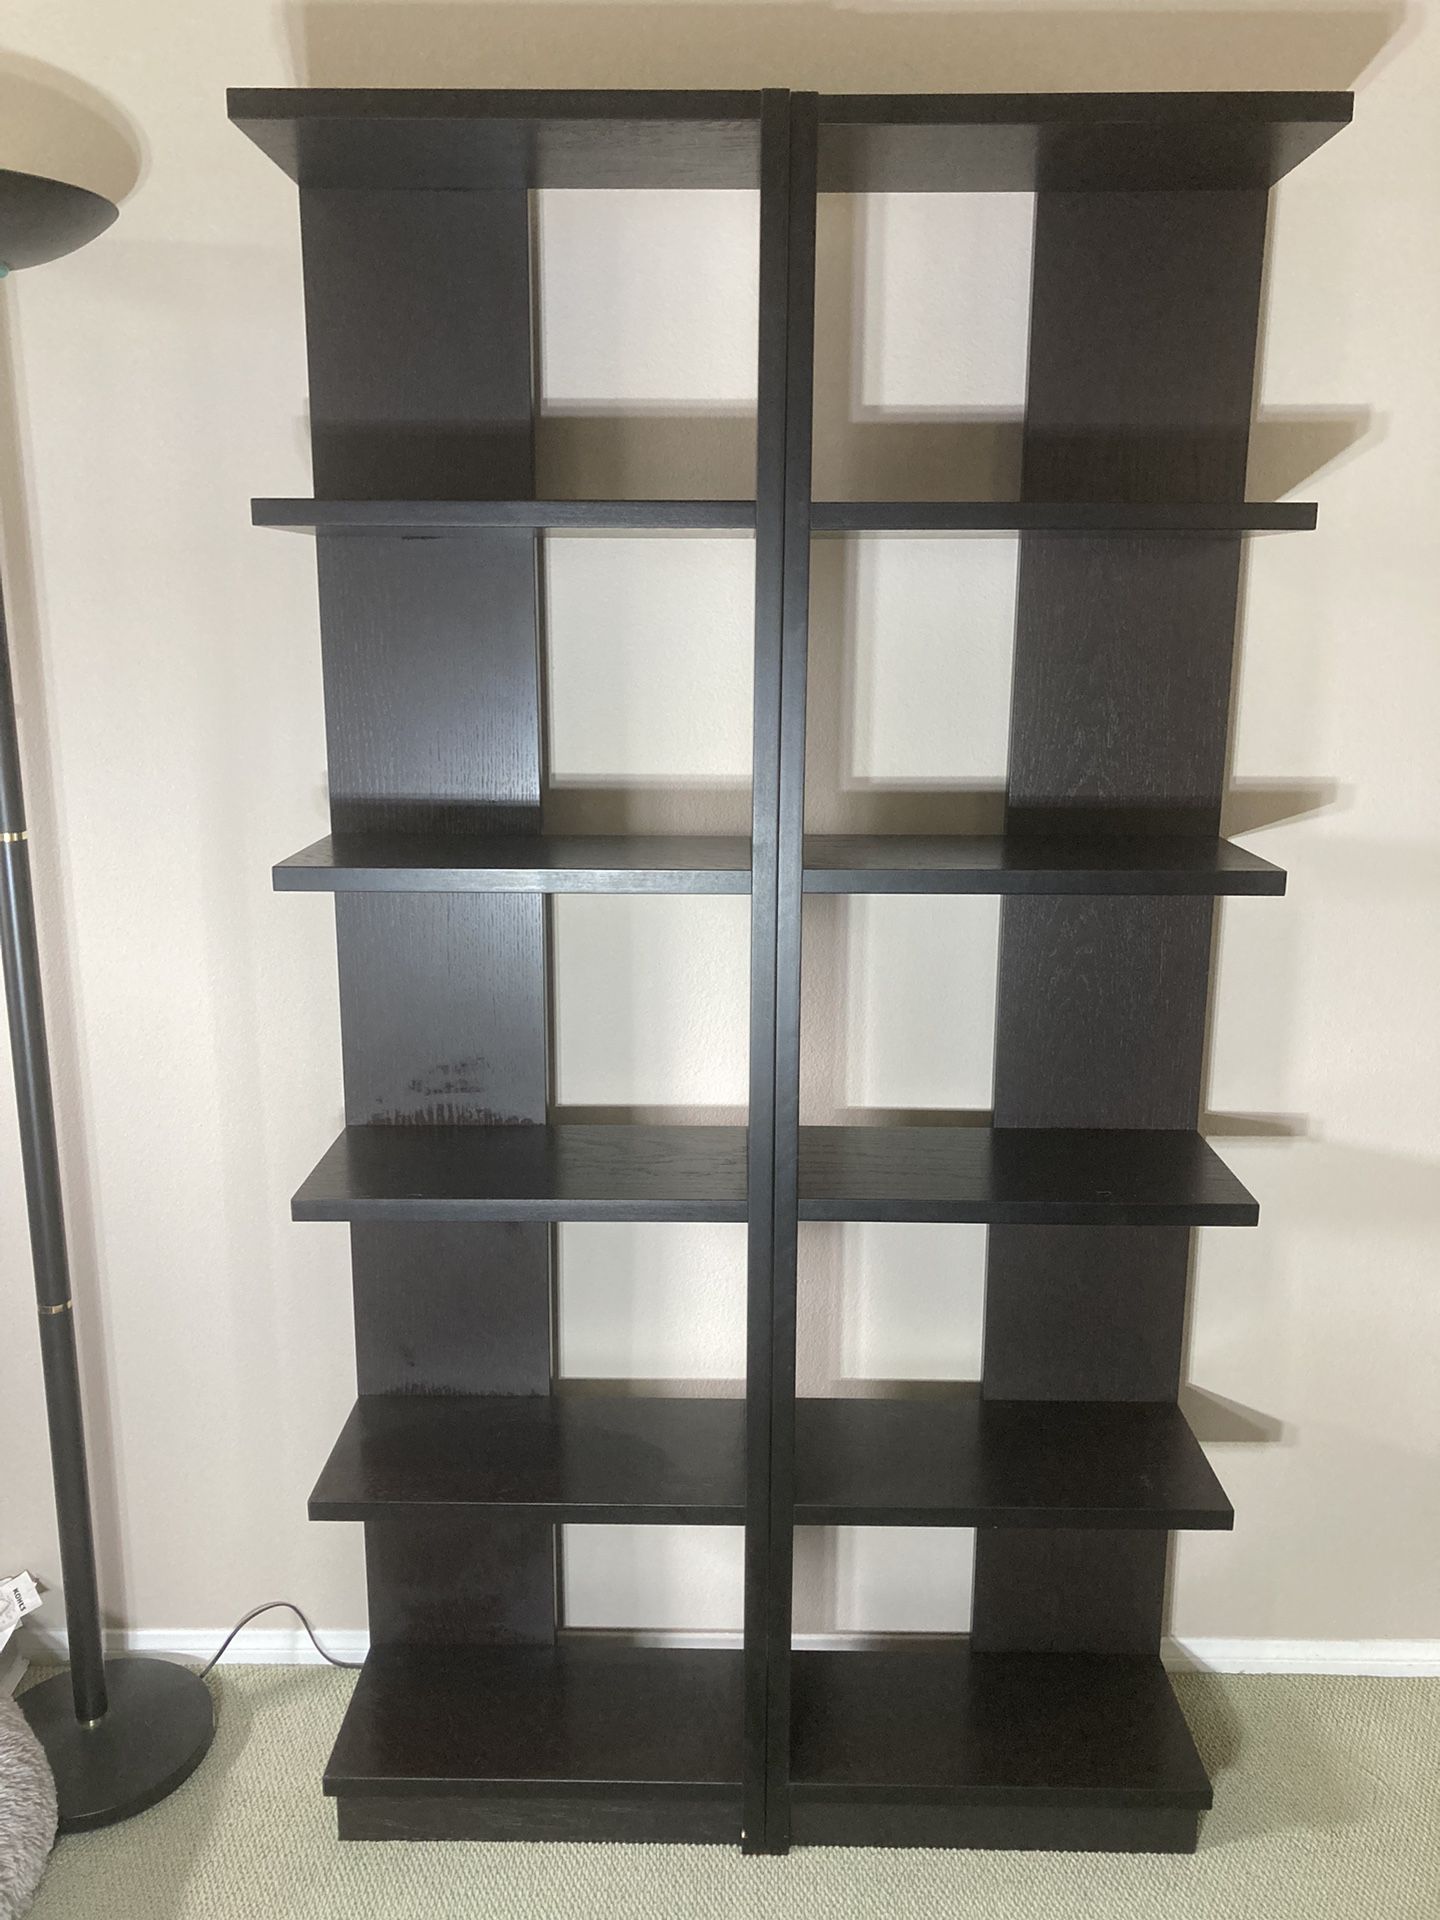 Crate & Barrel Elements Bookshelves - 5 Shelves - Sold As A pair